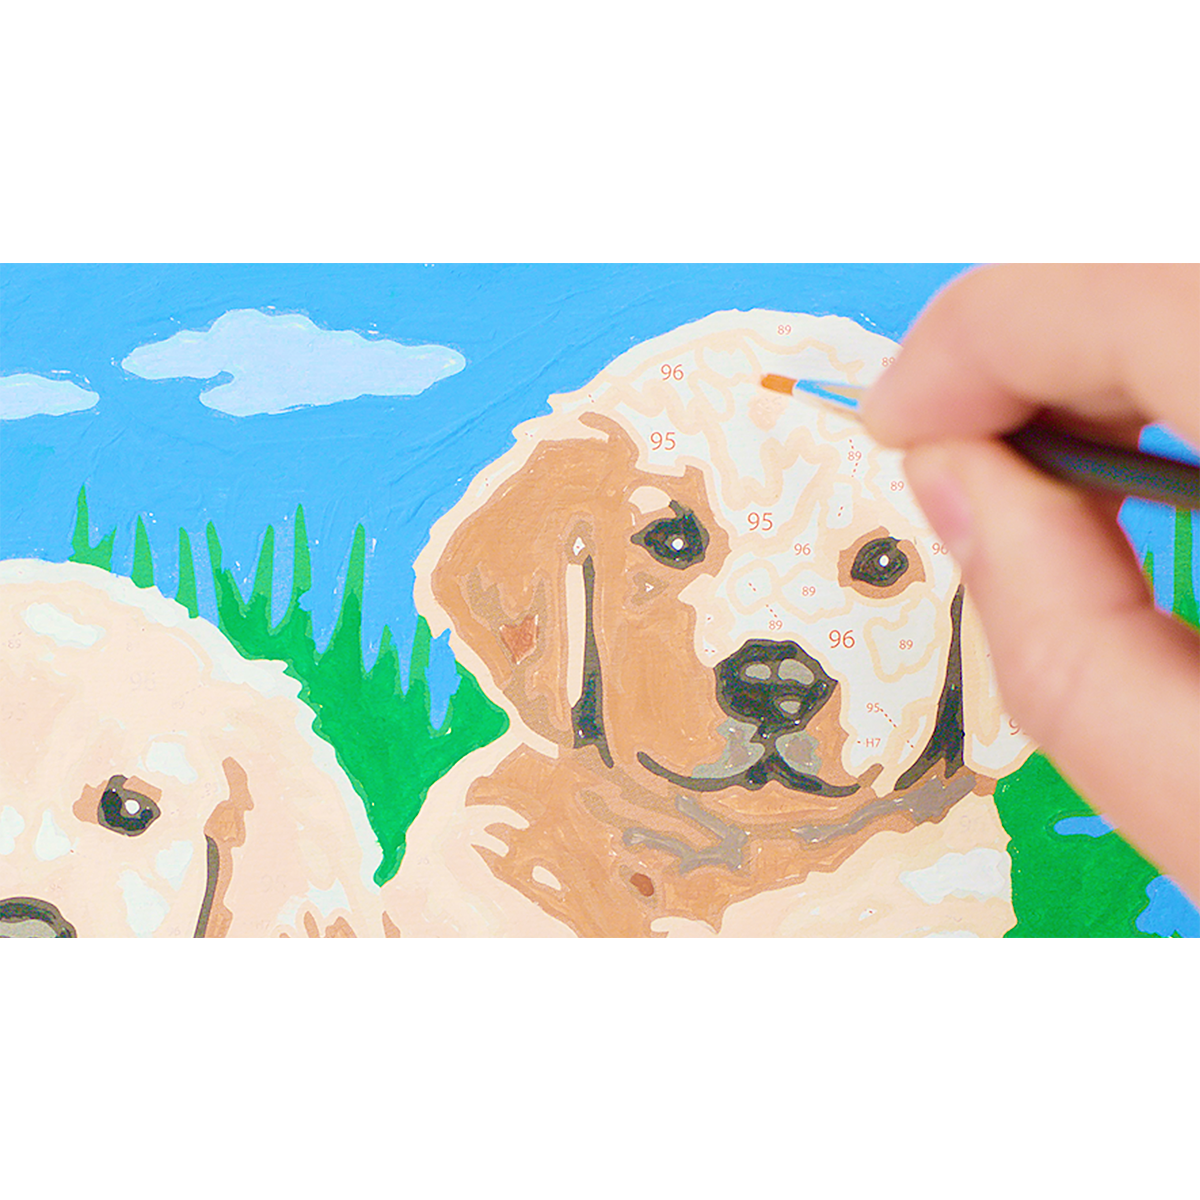 Ravensburger creart per bambini, kit per dipingere con i numeri, 7+, serie e, cani retriever - CREART